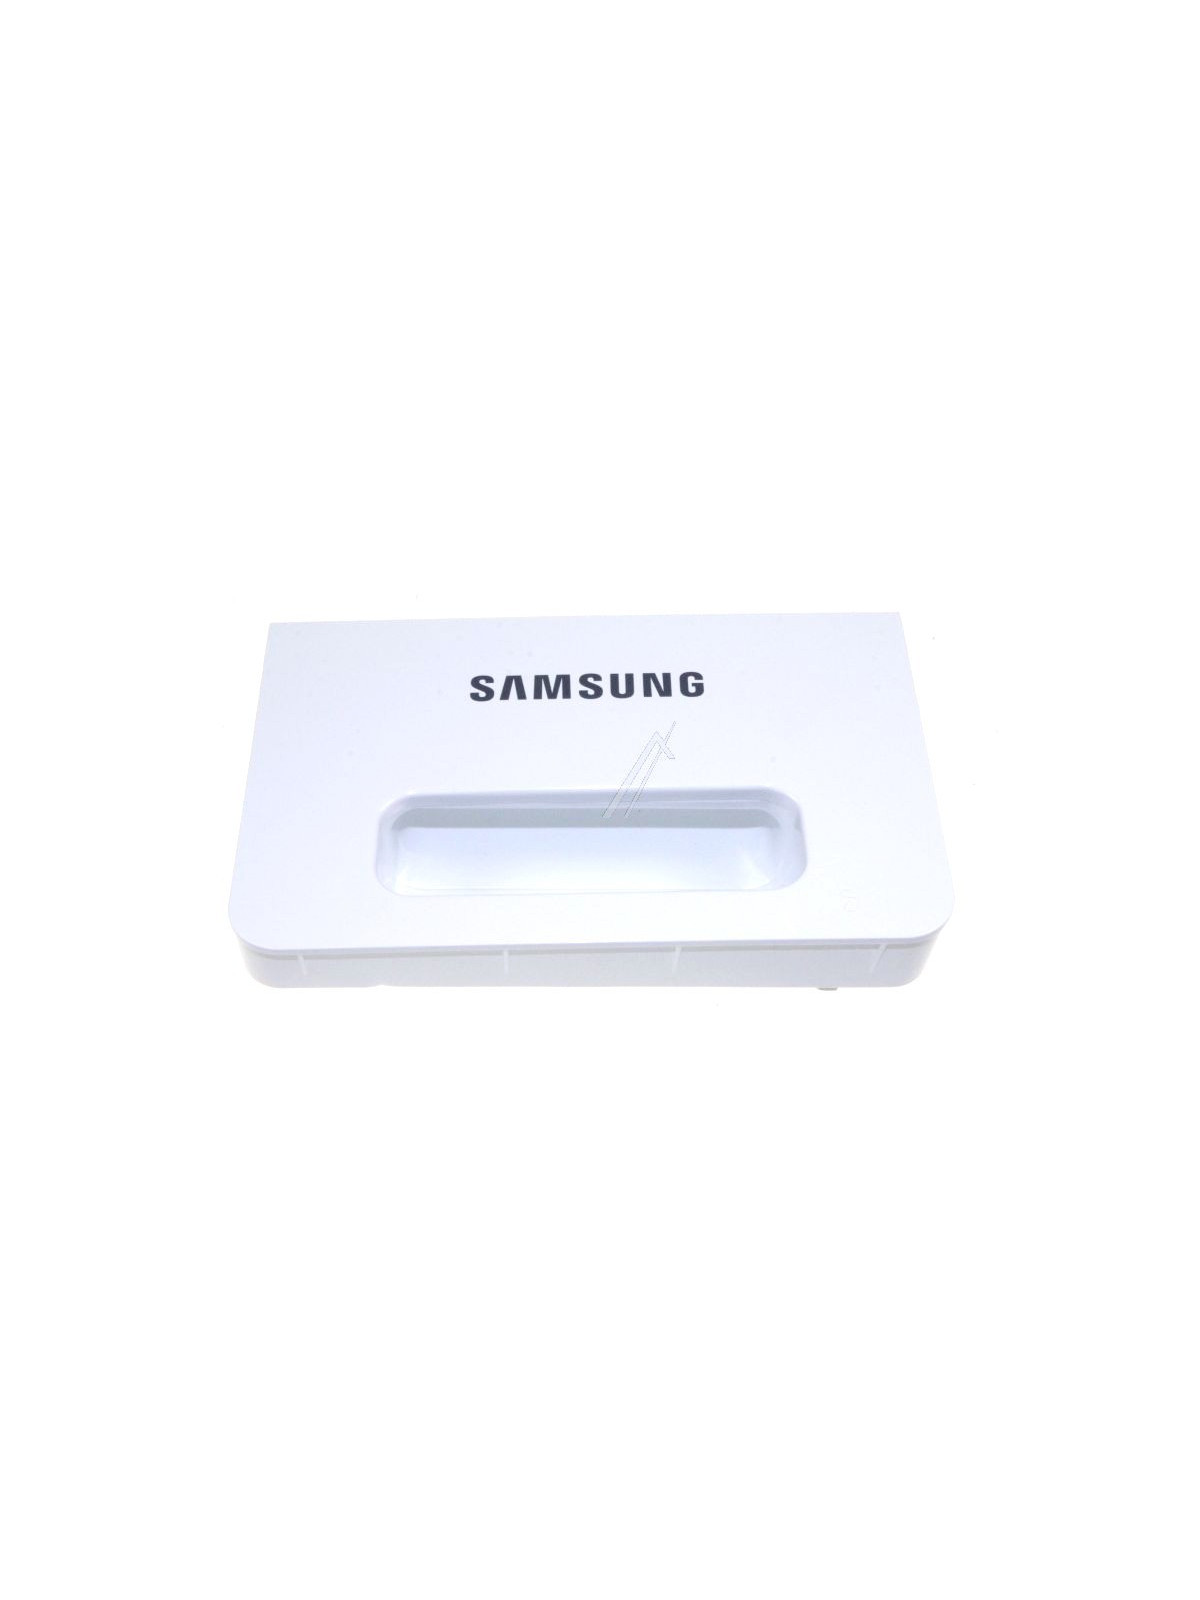 Façade bac à produits Samsung WF1704 - Lave linge